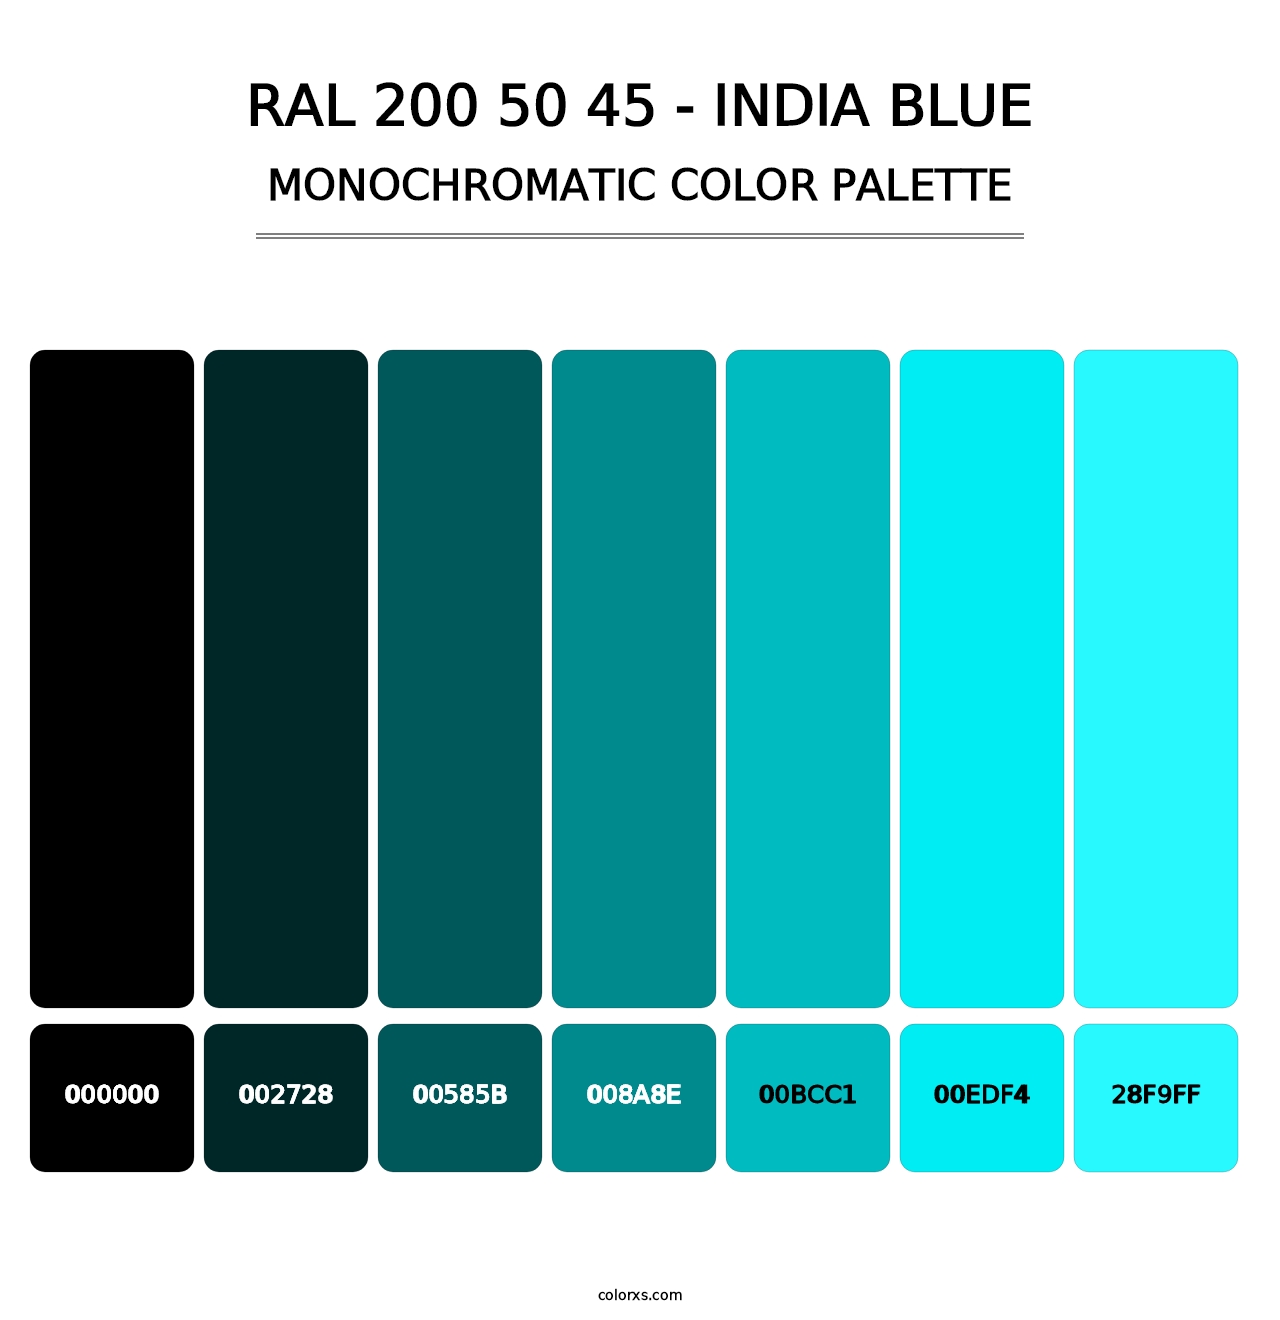 RAL 200 50 45 - India Blue - Monochromatic Color Palette